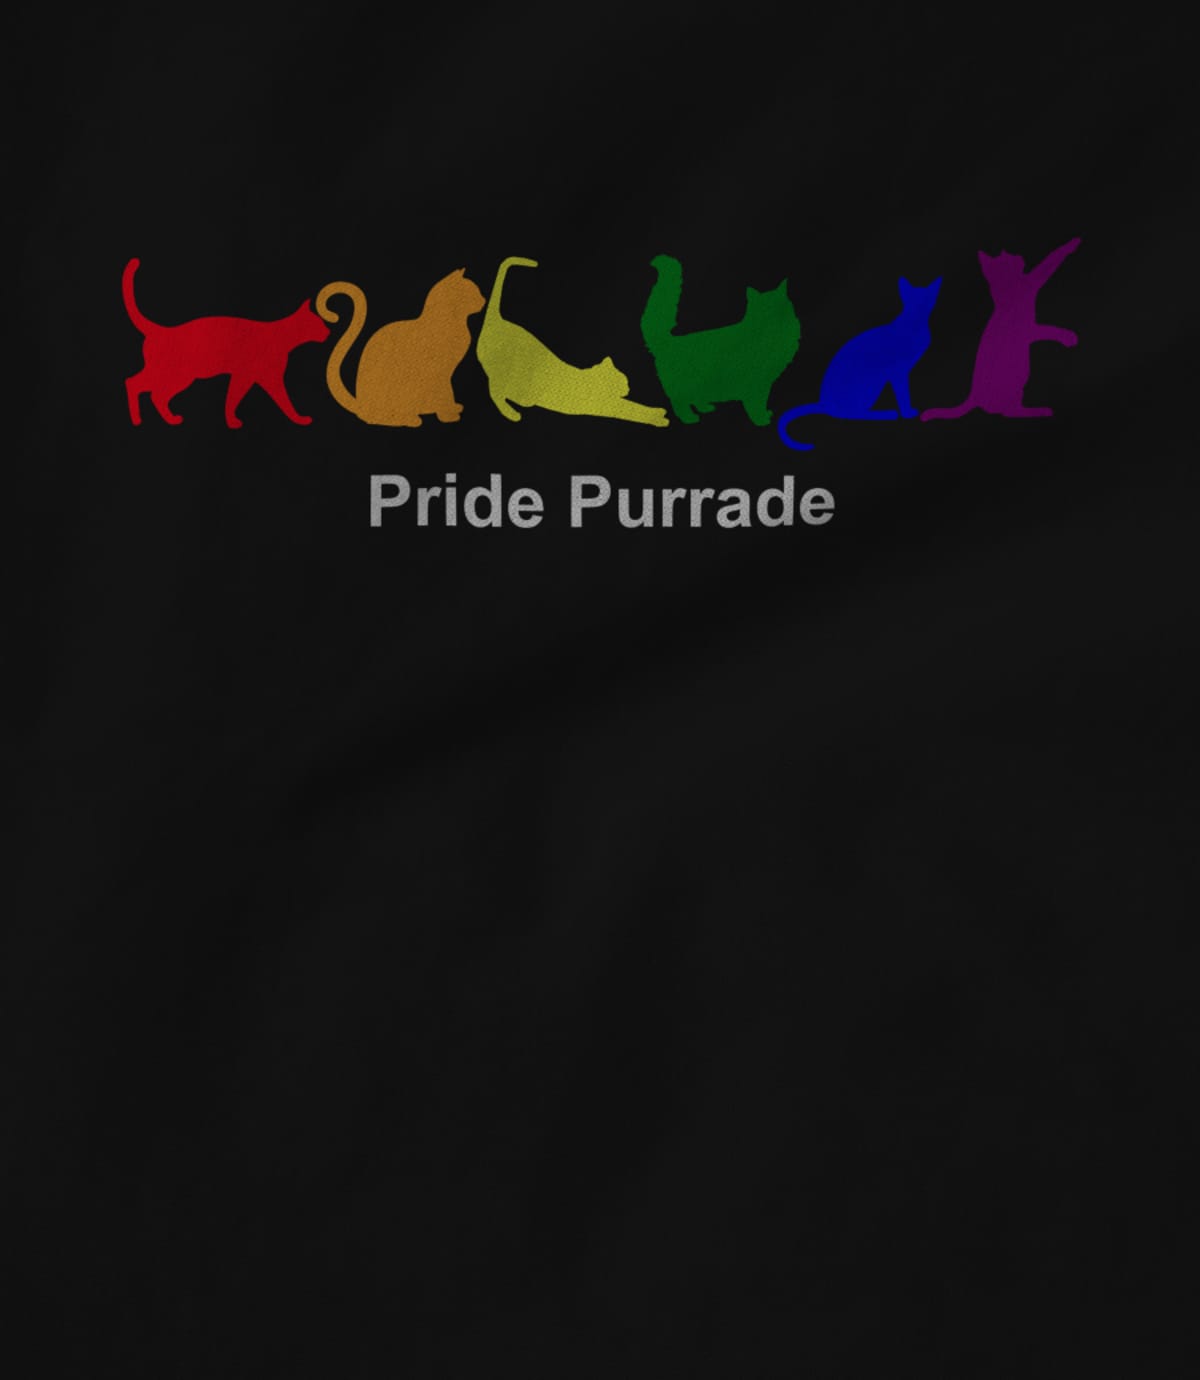 Tacostabber pride purrade 1624119481